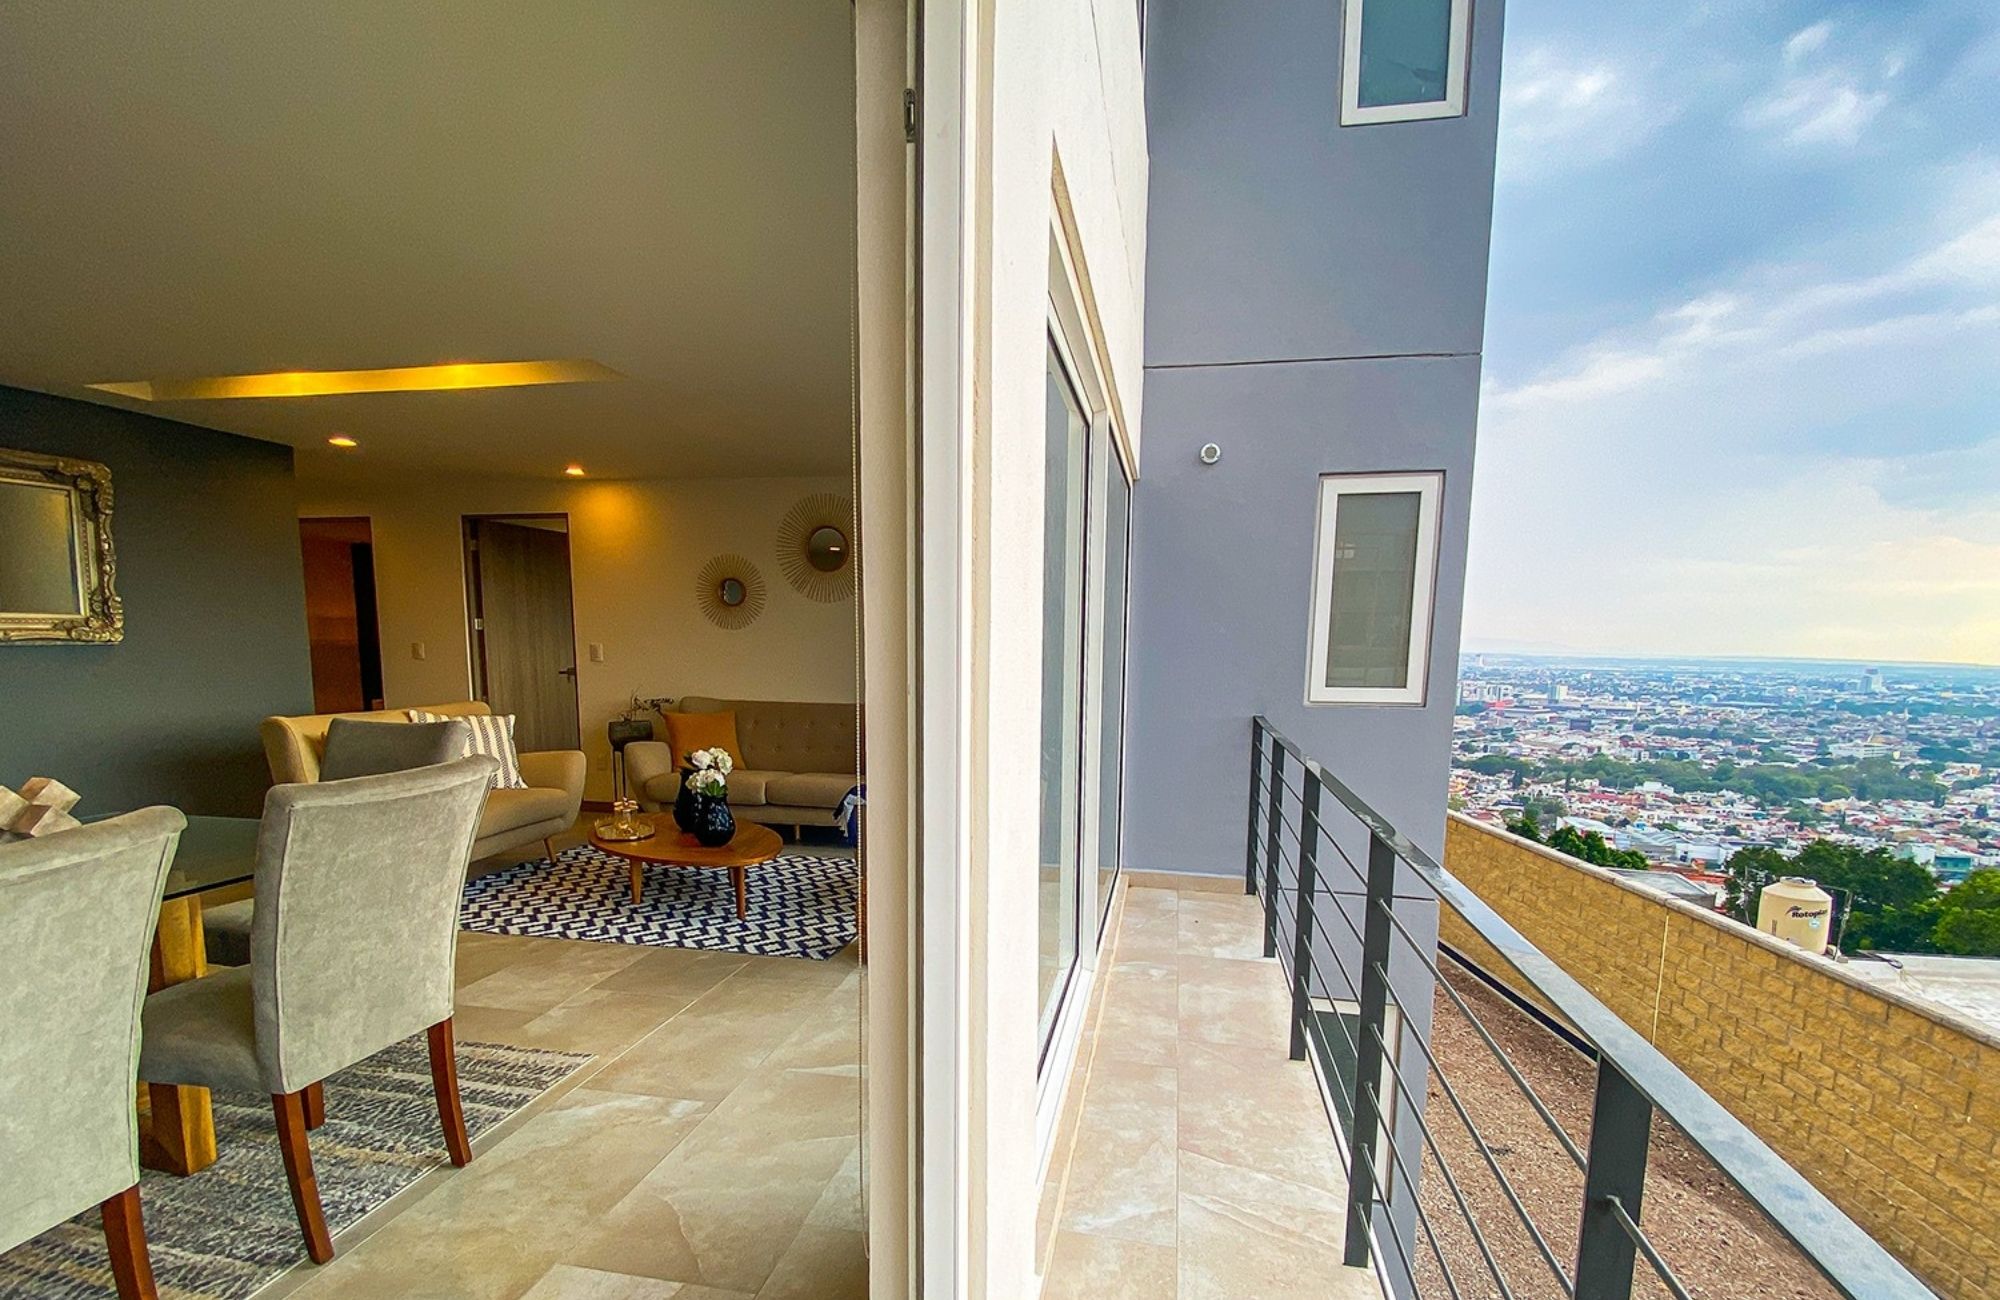 Apartment with terrace, laundry room, pool, gym, pre-construction, Zibata, Querétaro.